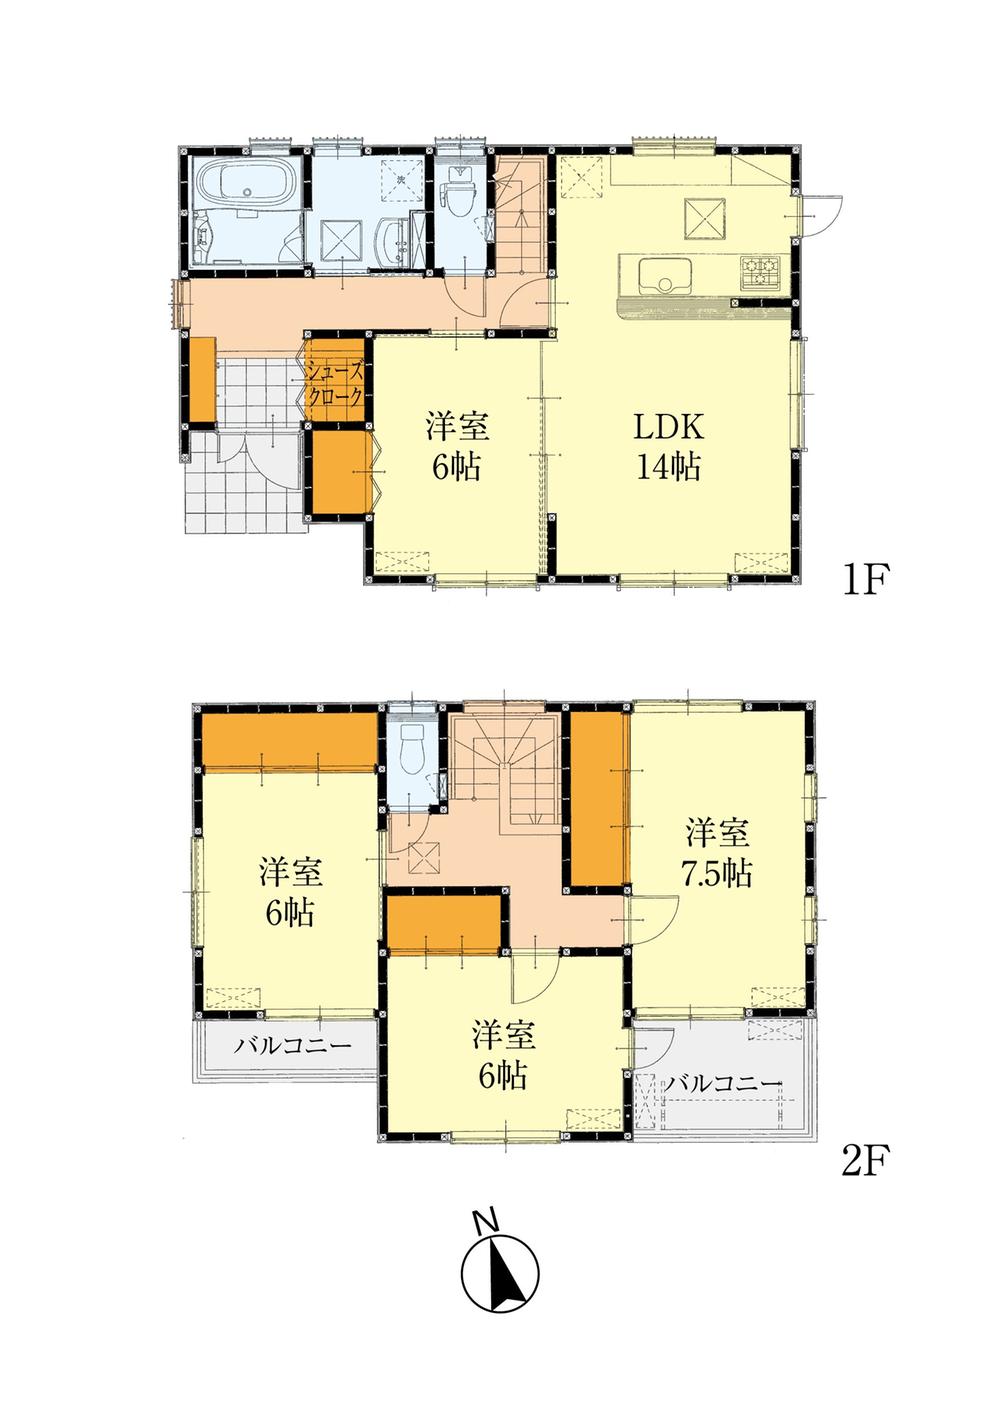 Floor plan. 27,200,000 yen, 4LDK, Land area 200.1 sq m , Building area 101.01 sq m spacious 4LDK